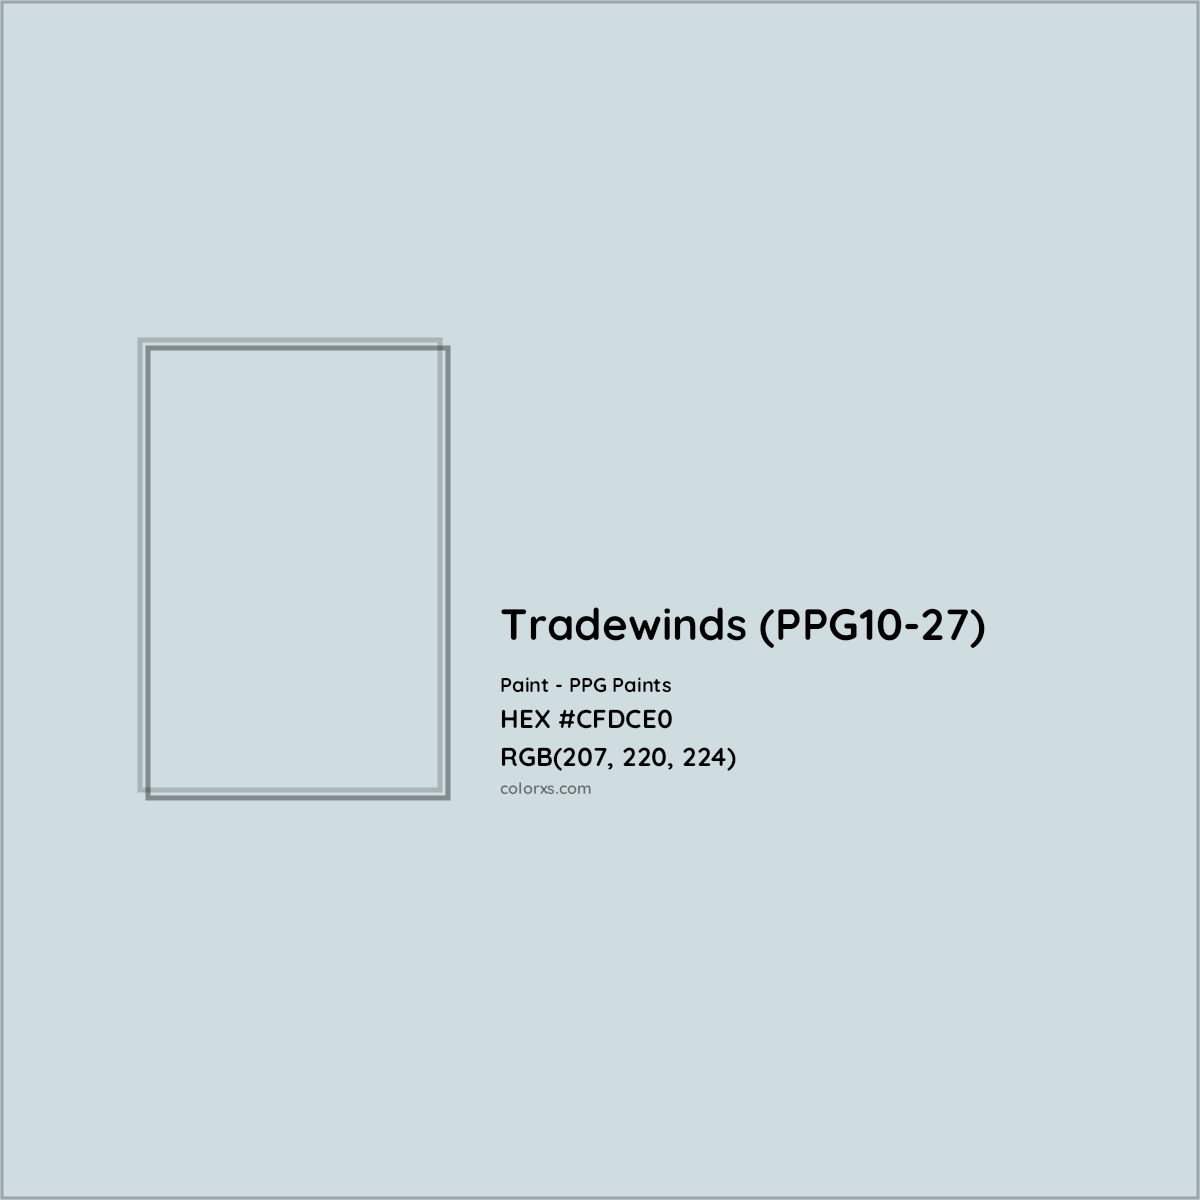 HEX #CFDCE0 Tradewinds (PPG10-27) Paint PPG Paints - Color Code